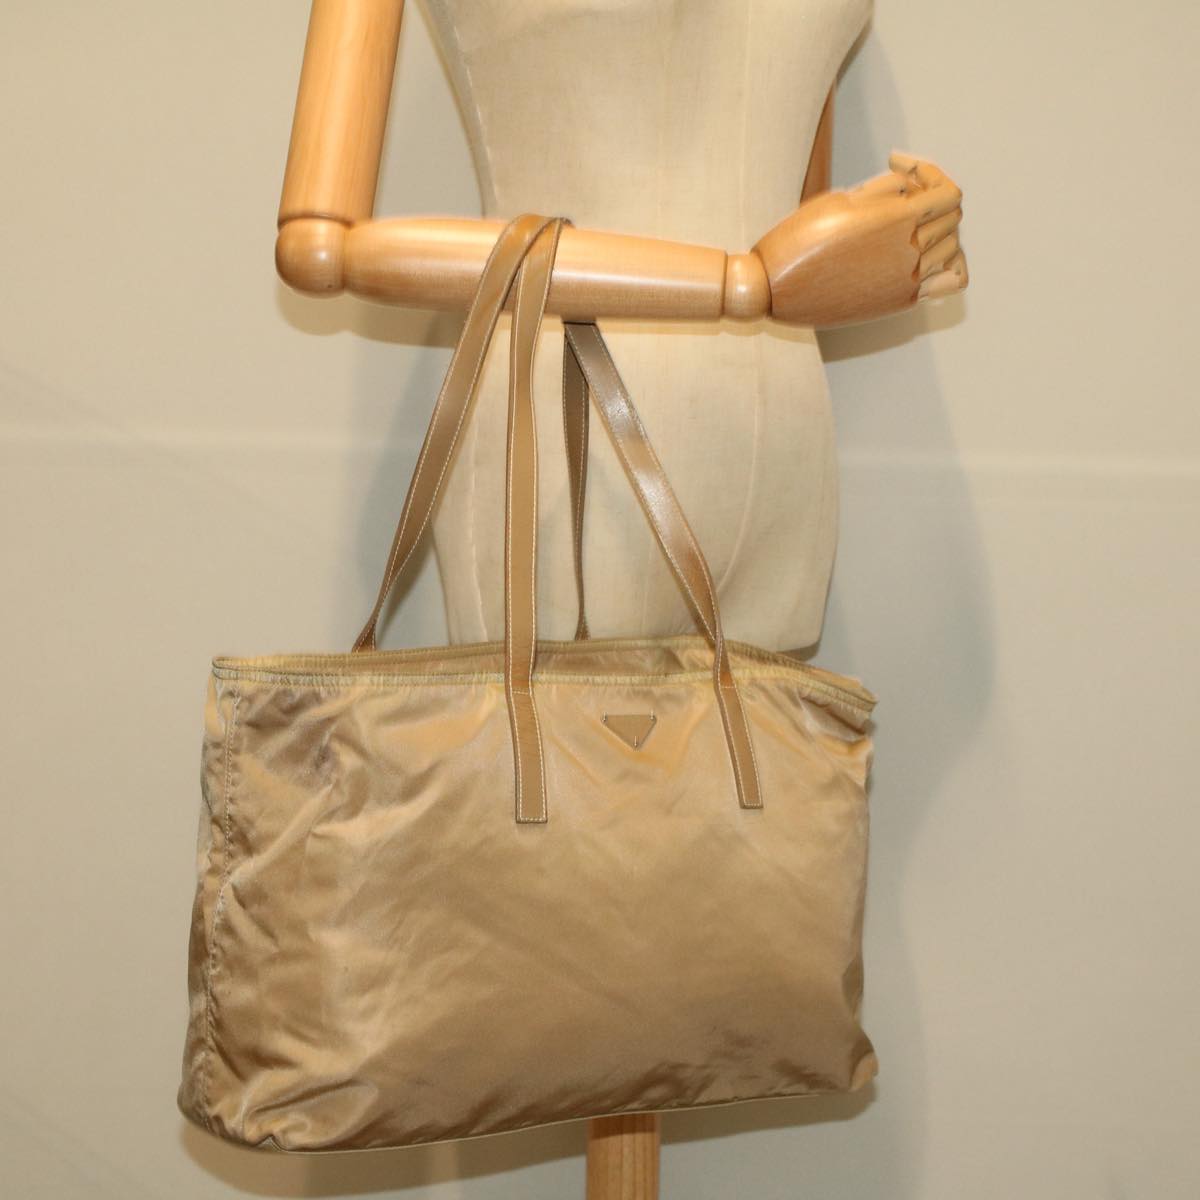 PRADA Hand Bag Nylon Beige Auth 58570